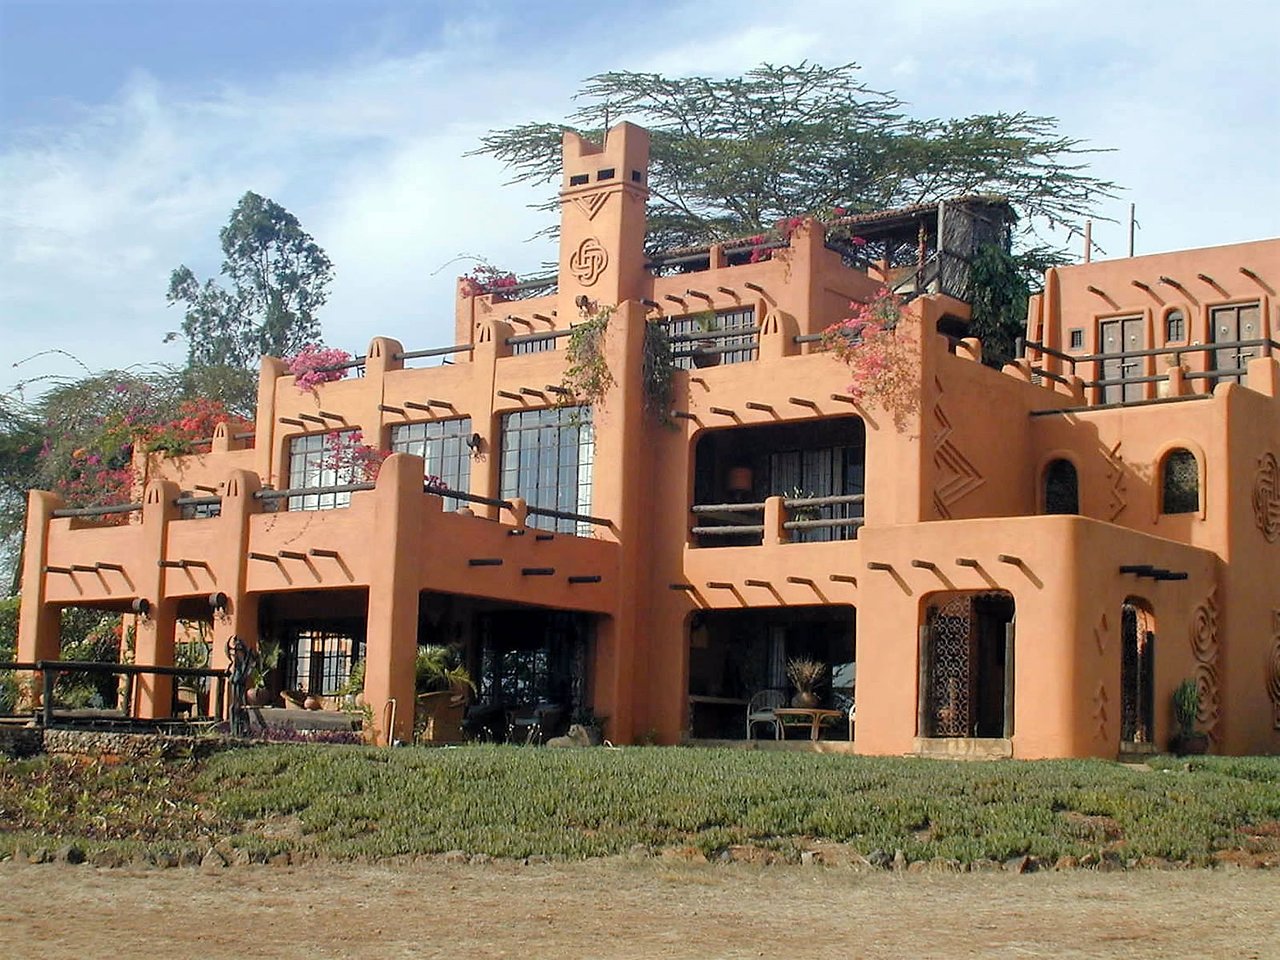 Nairobi National Park  Hotels, Lodges And Accommodation